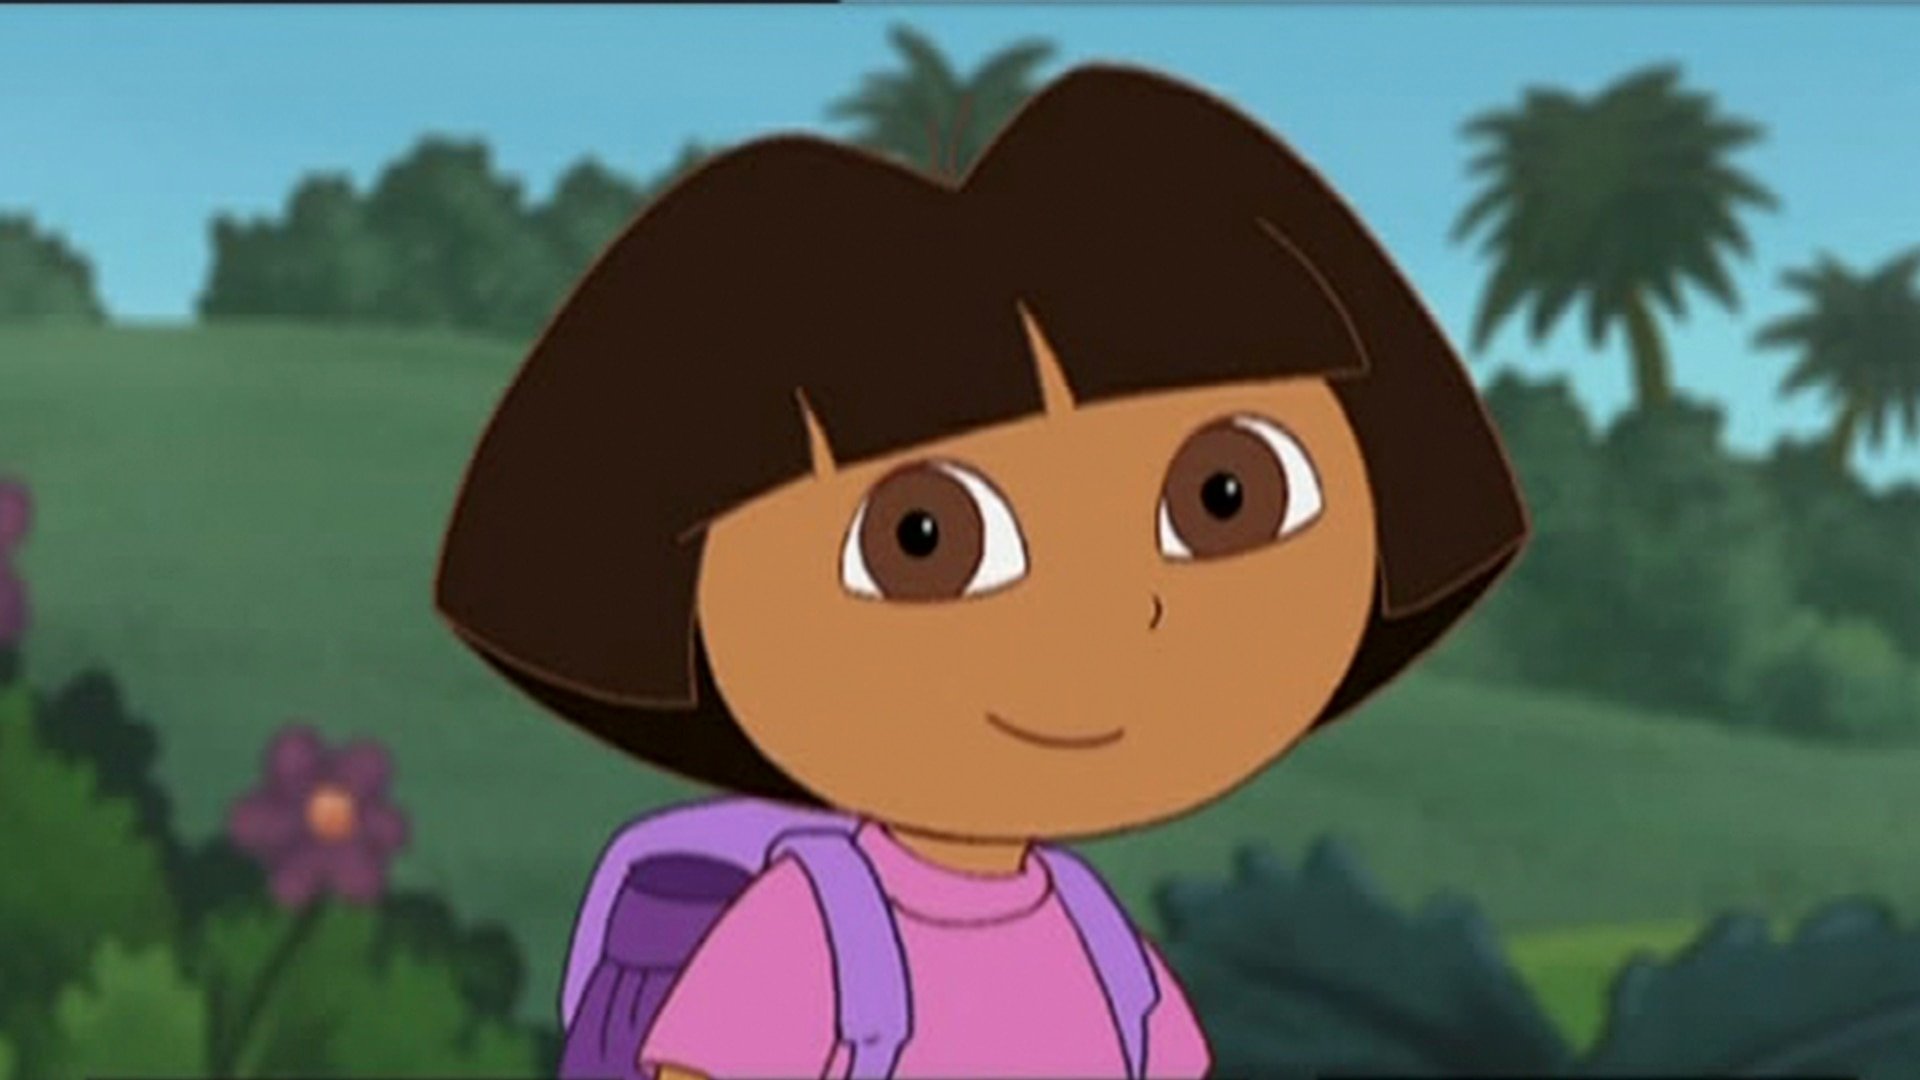 Watch Dora the Explorer Season 2 Episode 40 Online - Stream Full Episodes